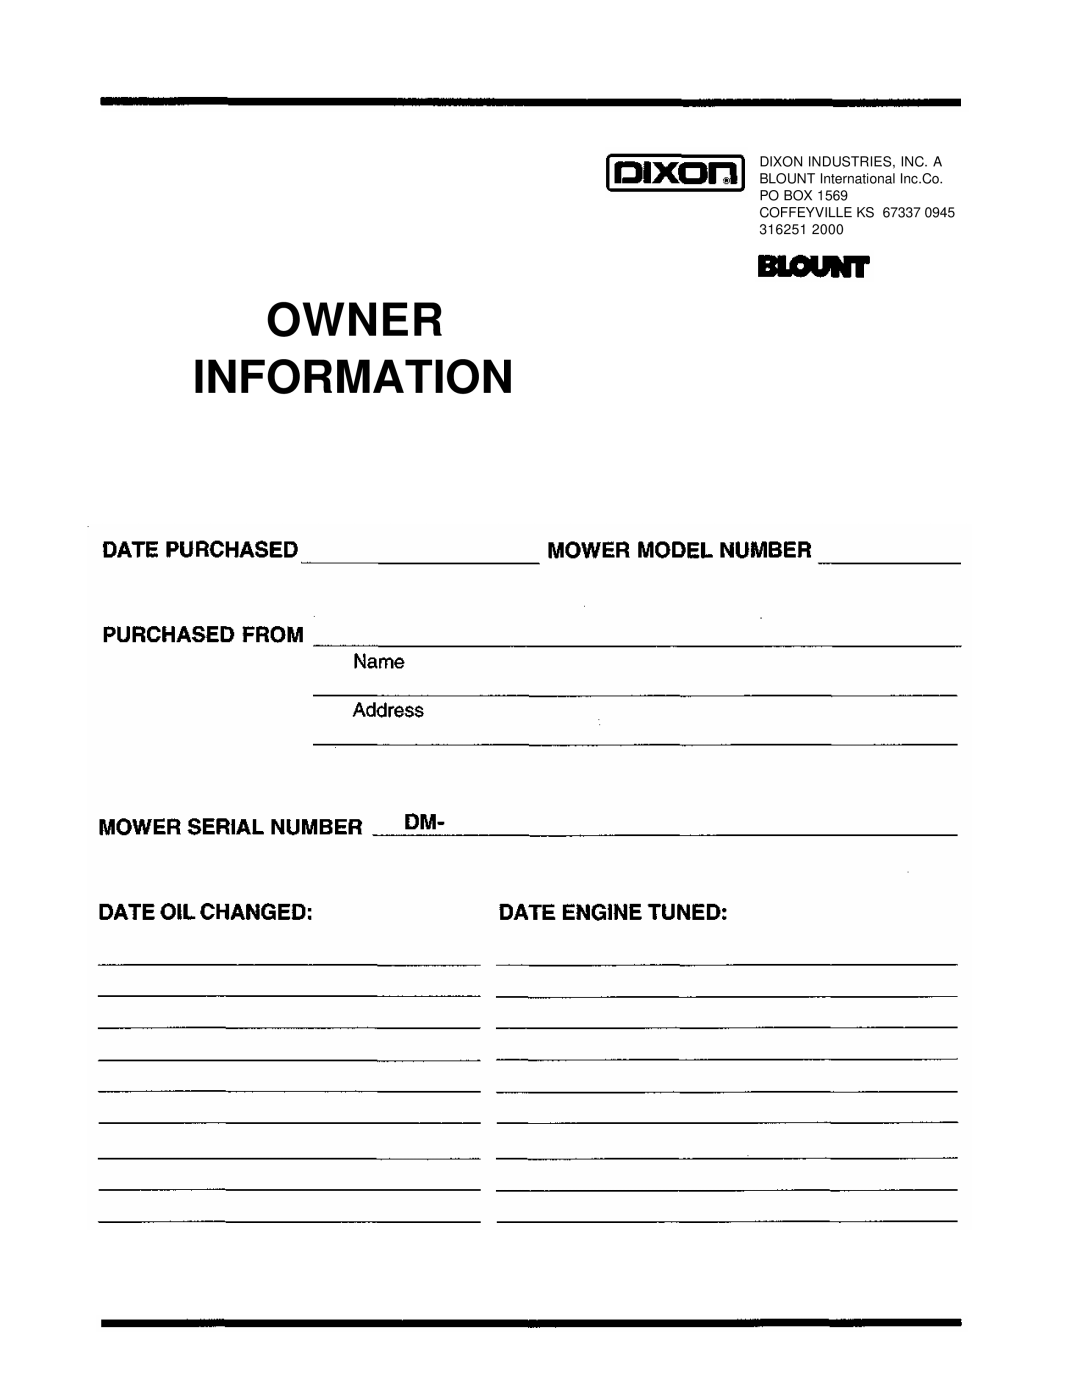 Dixon 5000 Series manual Owner Information 